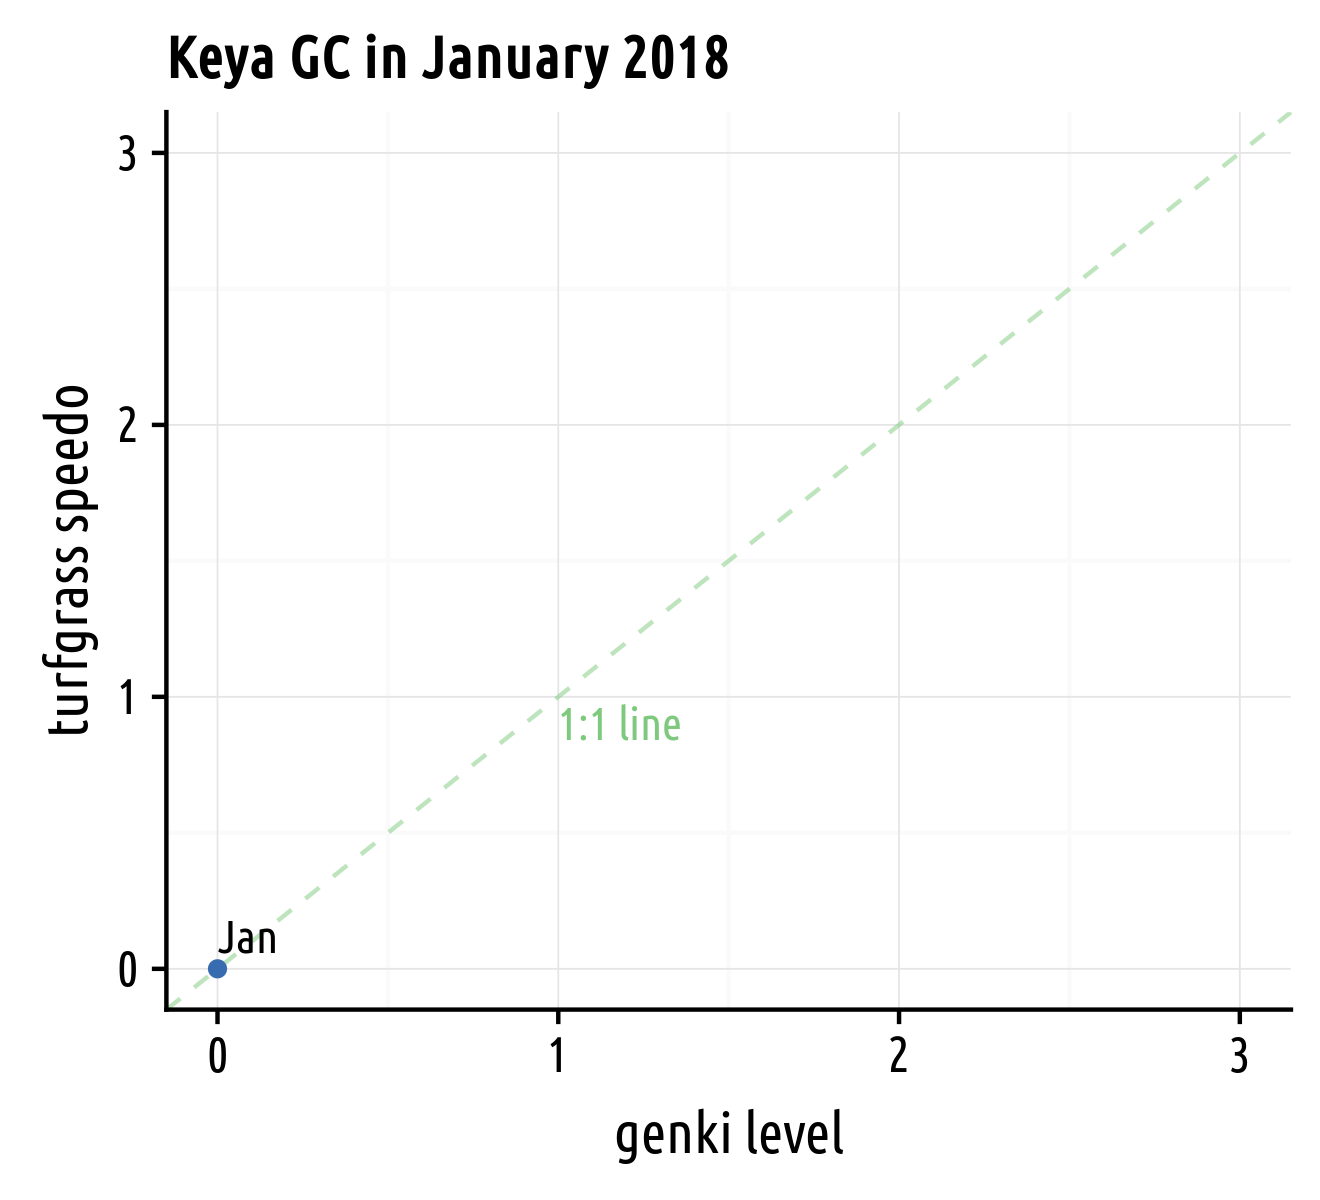 genki level plotted against speedo